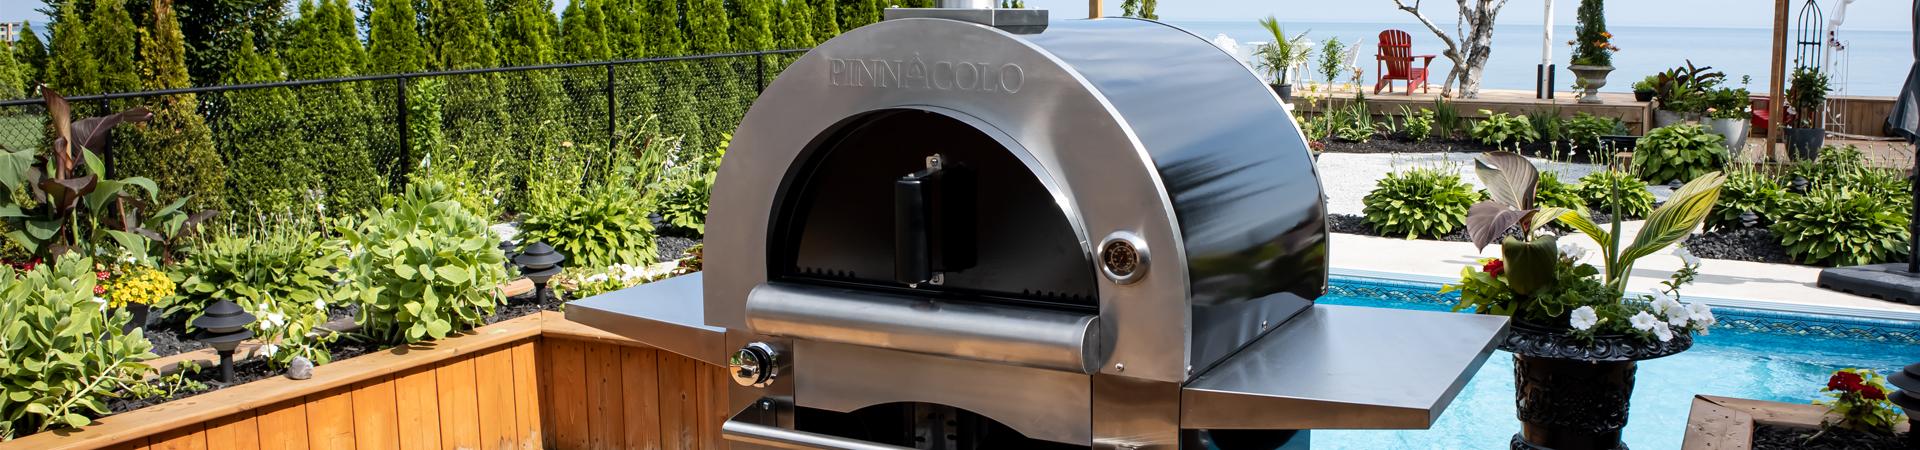 Pinnacolo Ibrido Hybrid Outdoor Pizza Oven — My Backyard Zone